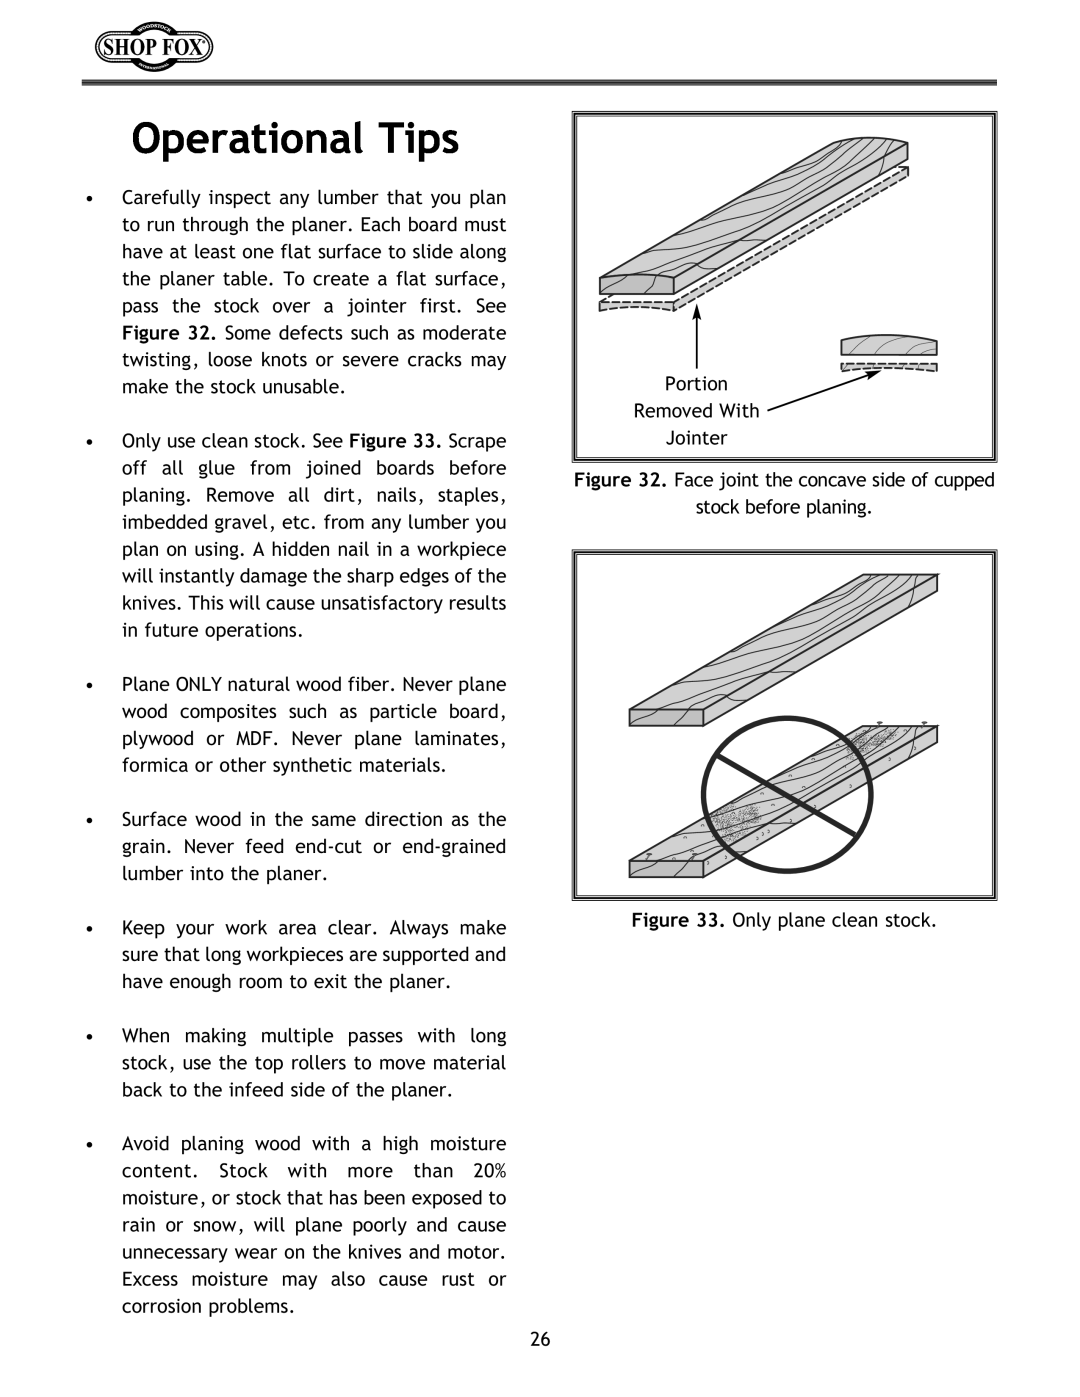 Woodstock W1683 instruction manual Operational Tips 